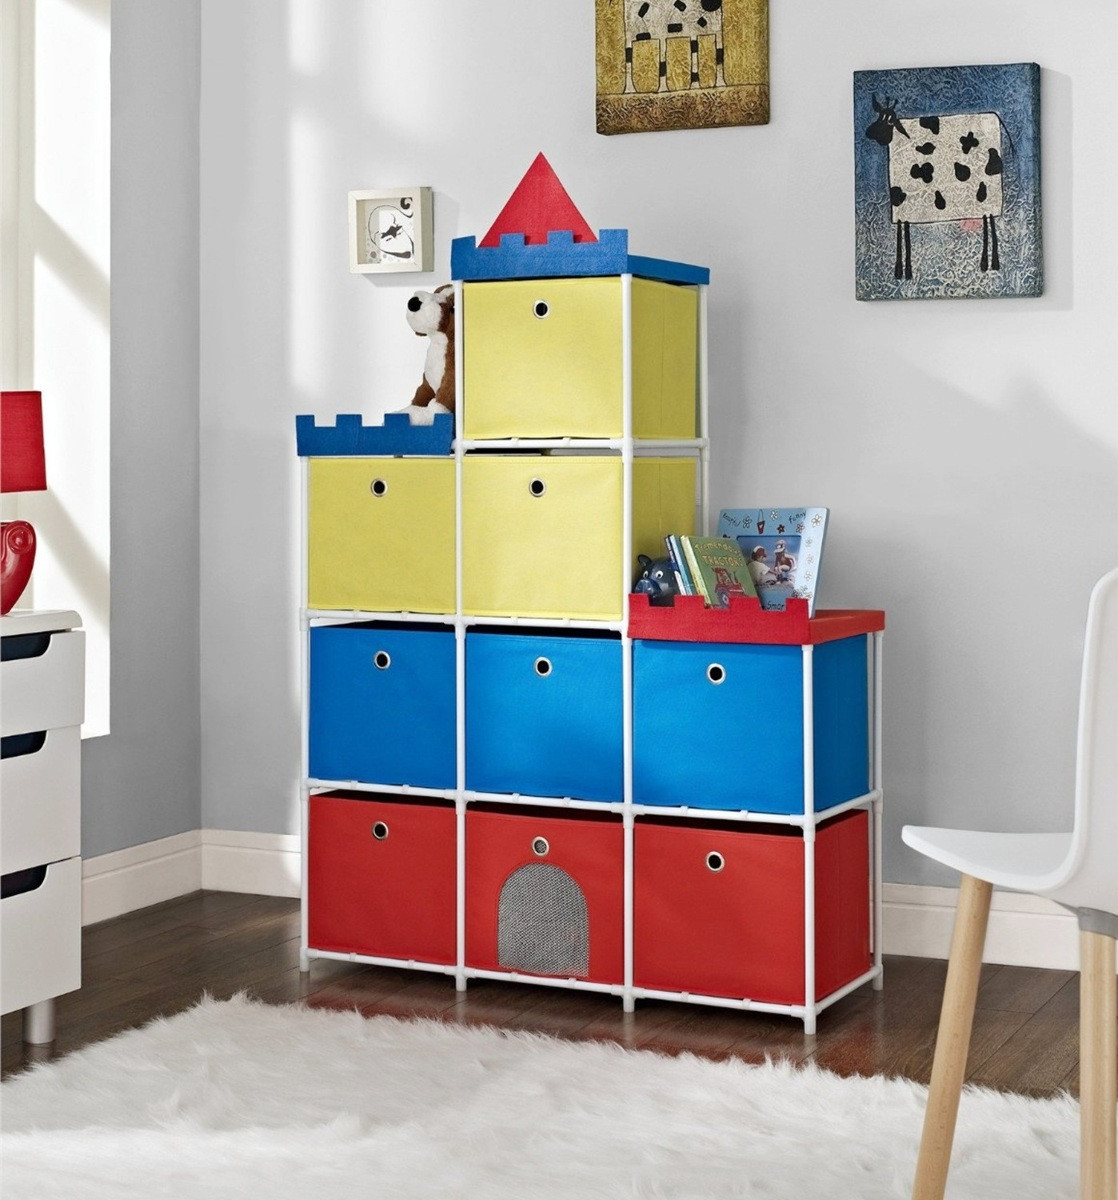 Children'S Storage Bins
 Altra Furniture 9 Bin Kids Storage Unit w Castle Theme